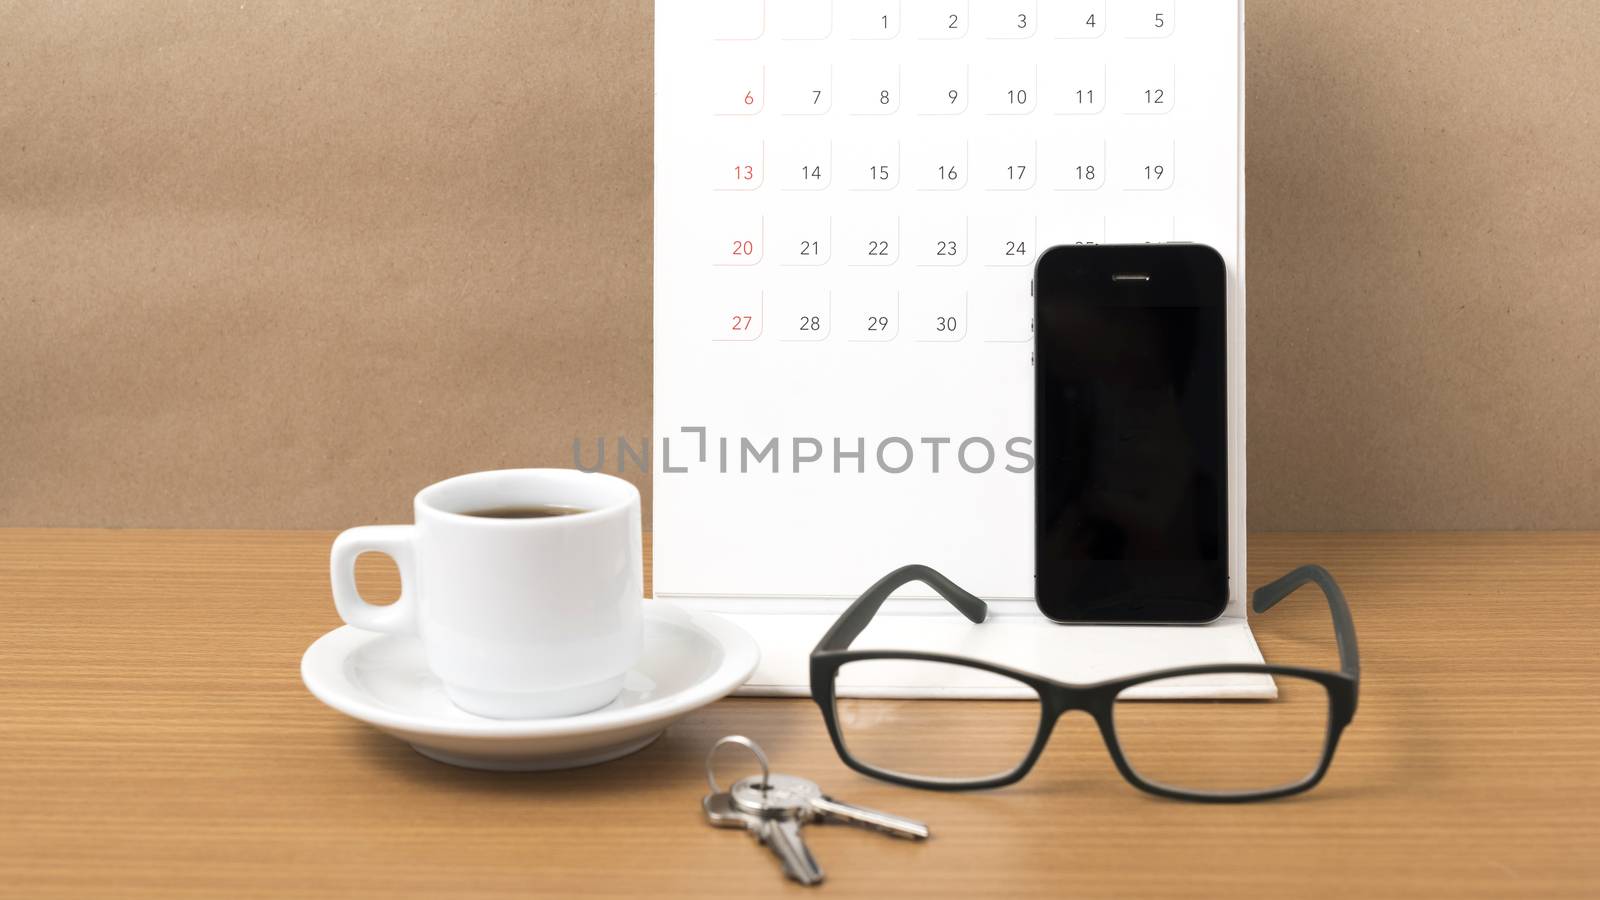 coffee,phone,eyeglasses,calendar and key on wood table background